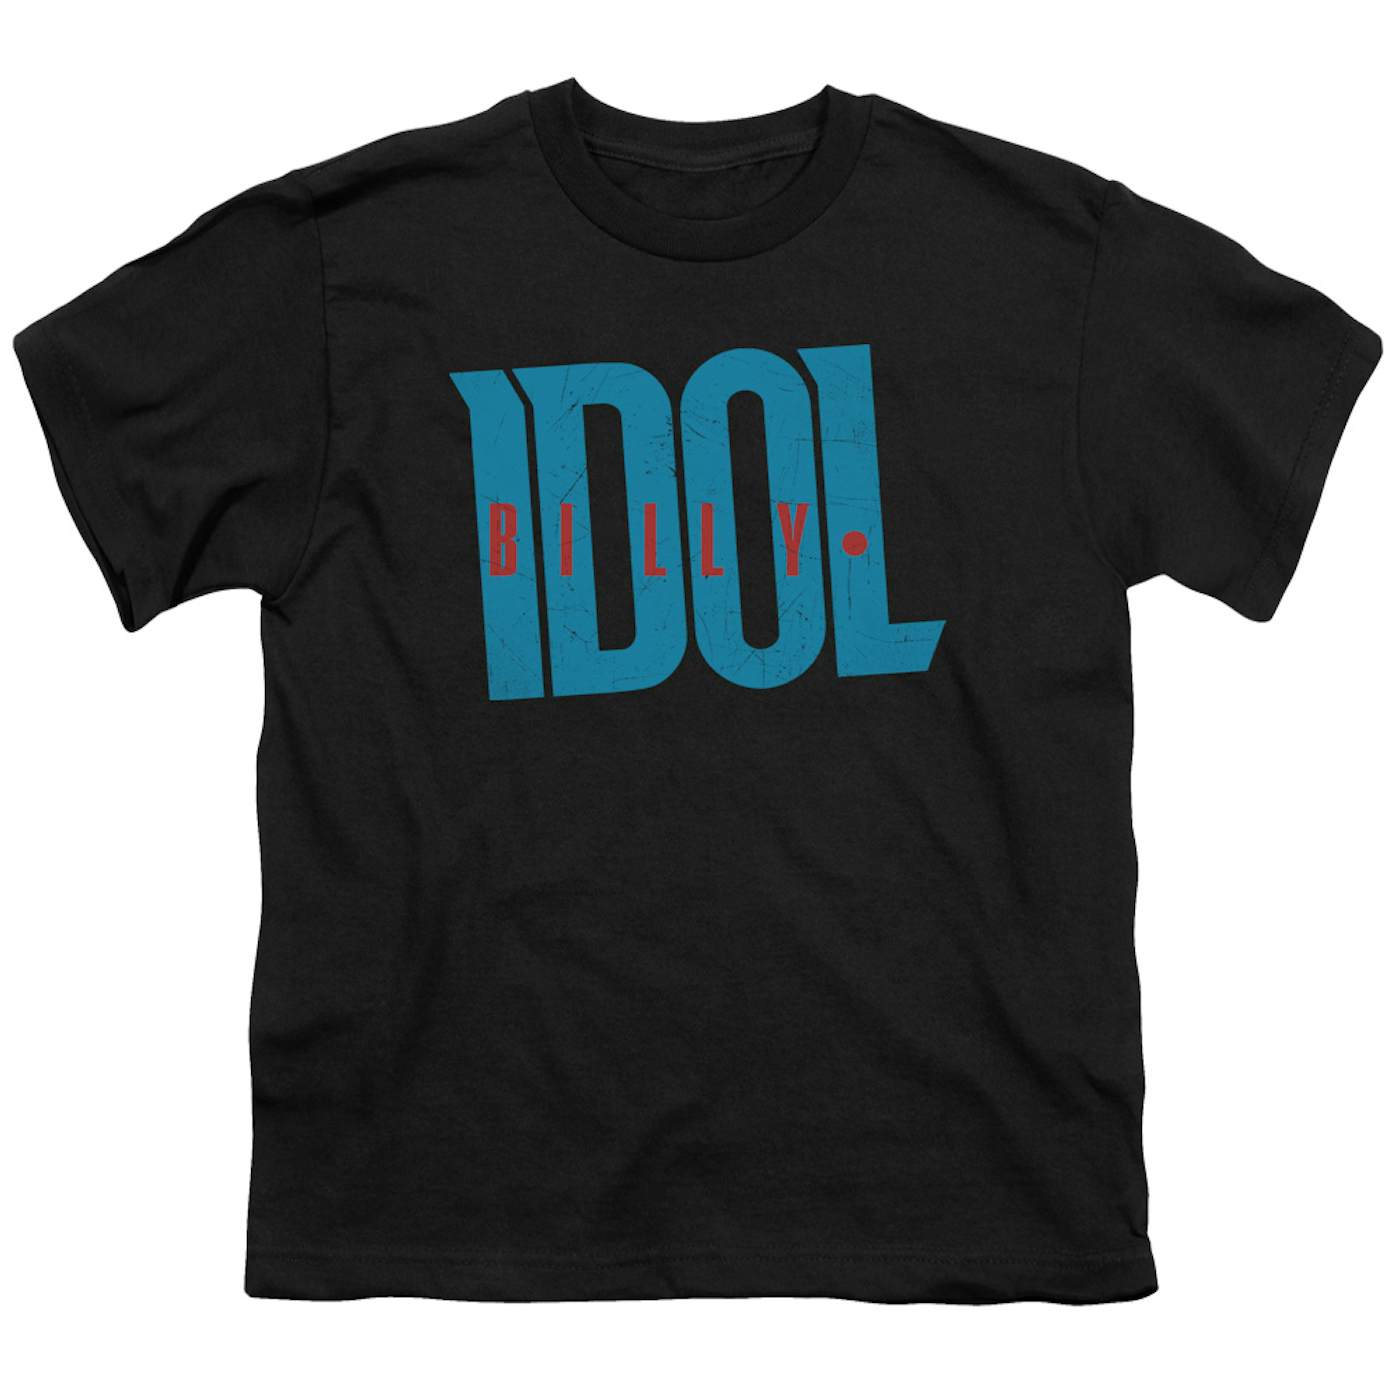 Billy Idol Youth Tee | LOGO Youth T Shirt